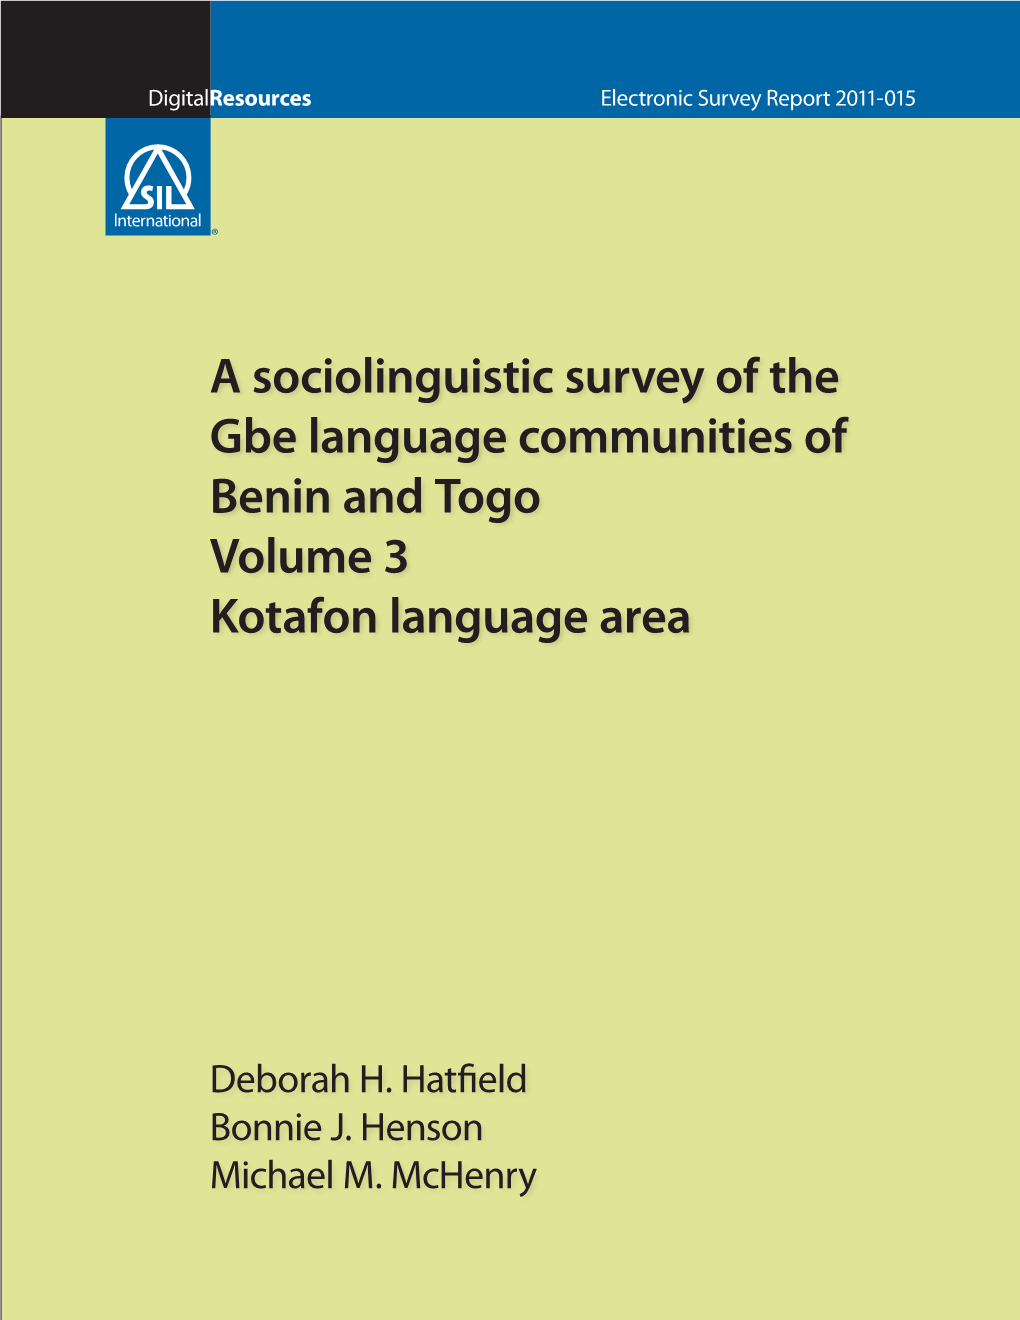 A Sociolinguistic Survey of the Gbe Language Communities of Benin and Togo Volume 3 Kotafon Language Area